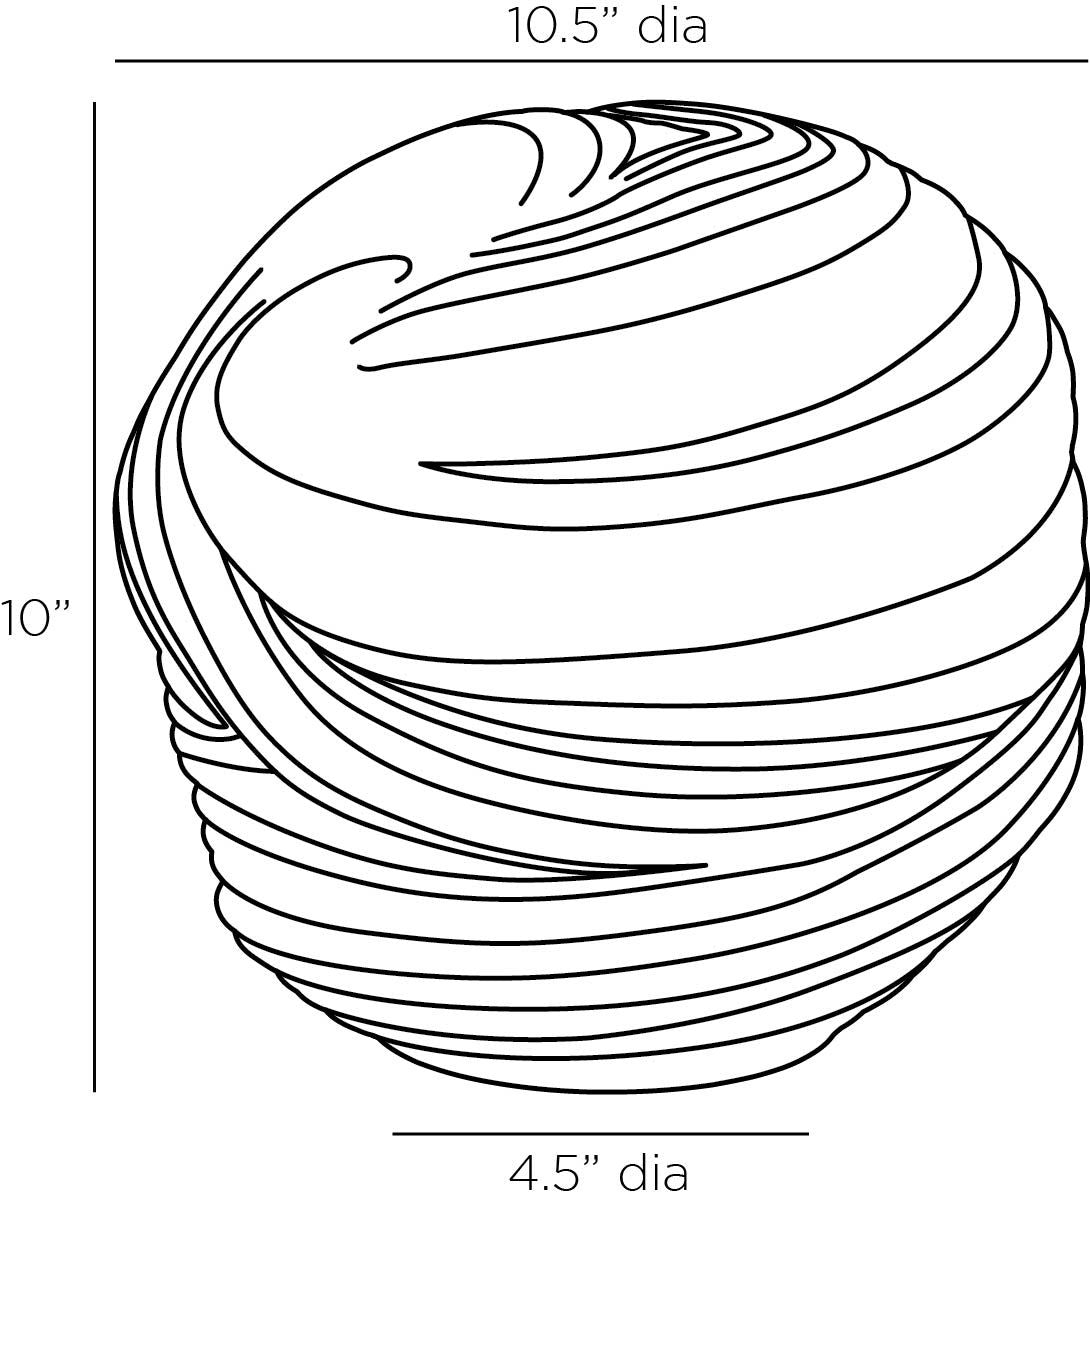 arteriors alexa sculpture diagram